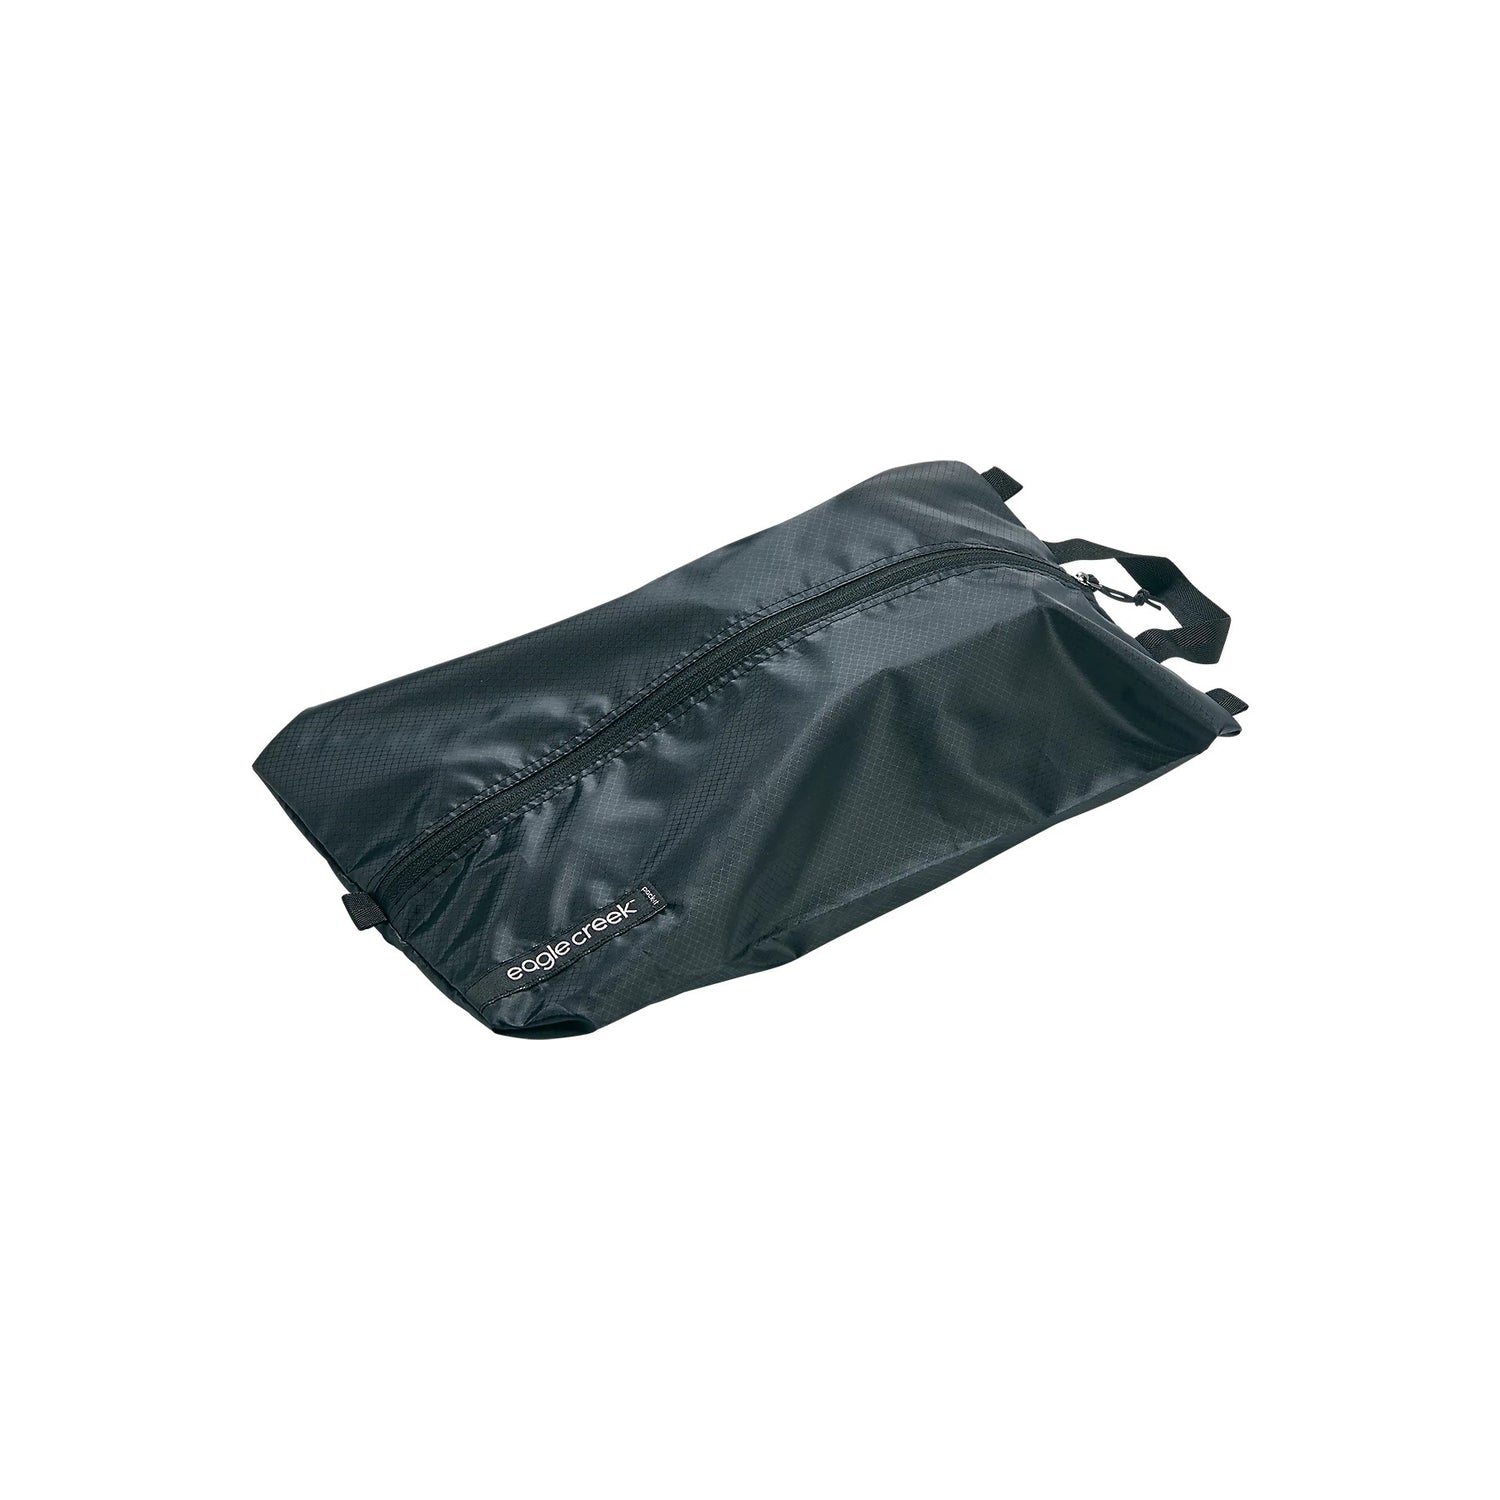 PACK-IT™ Isolate Shoe Sack - BLACK